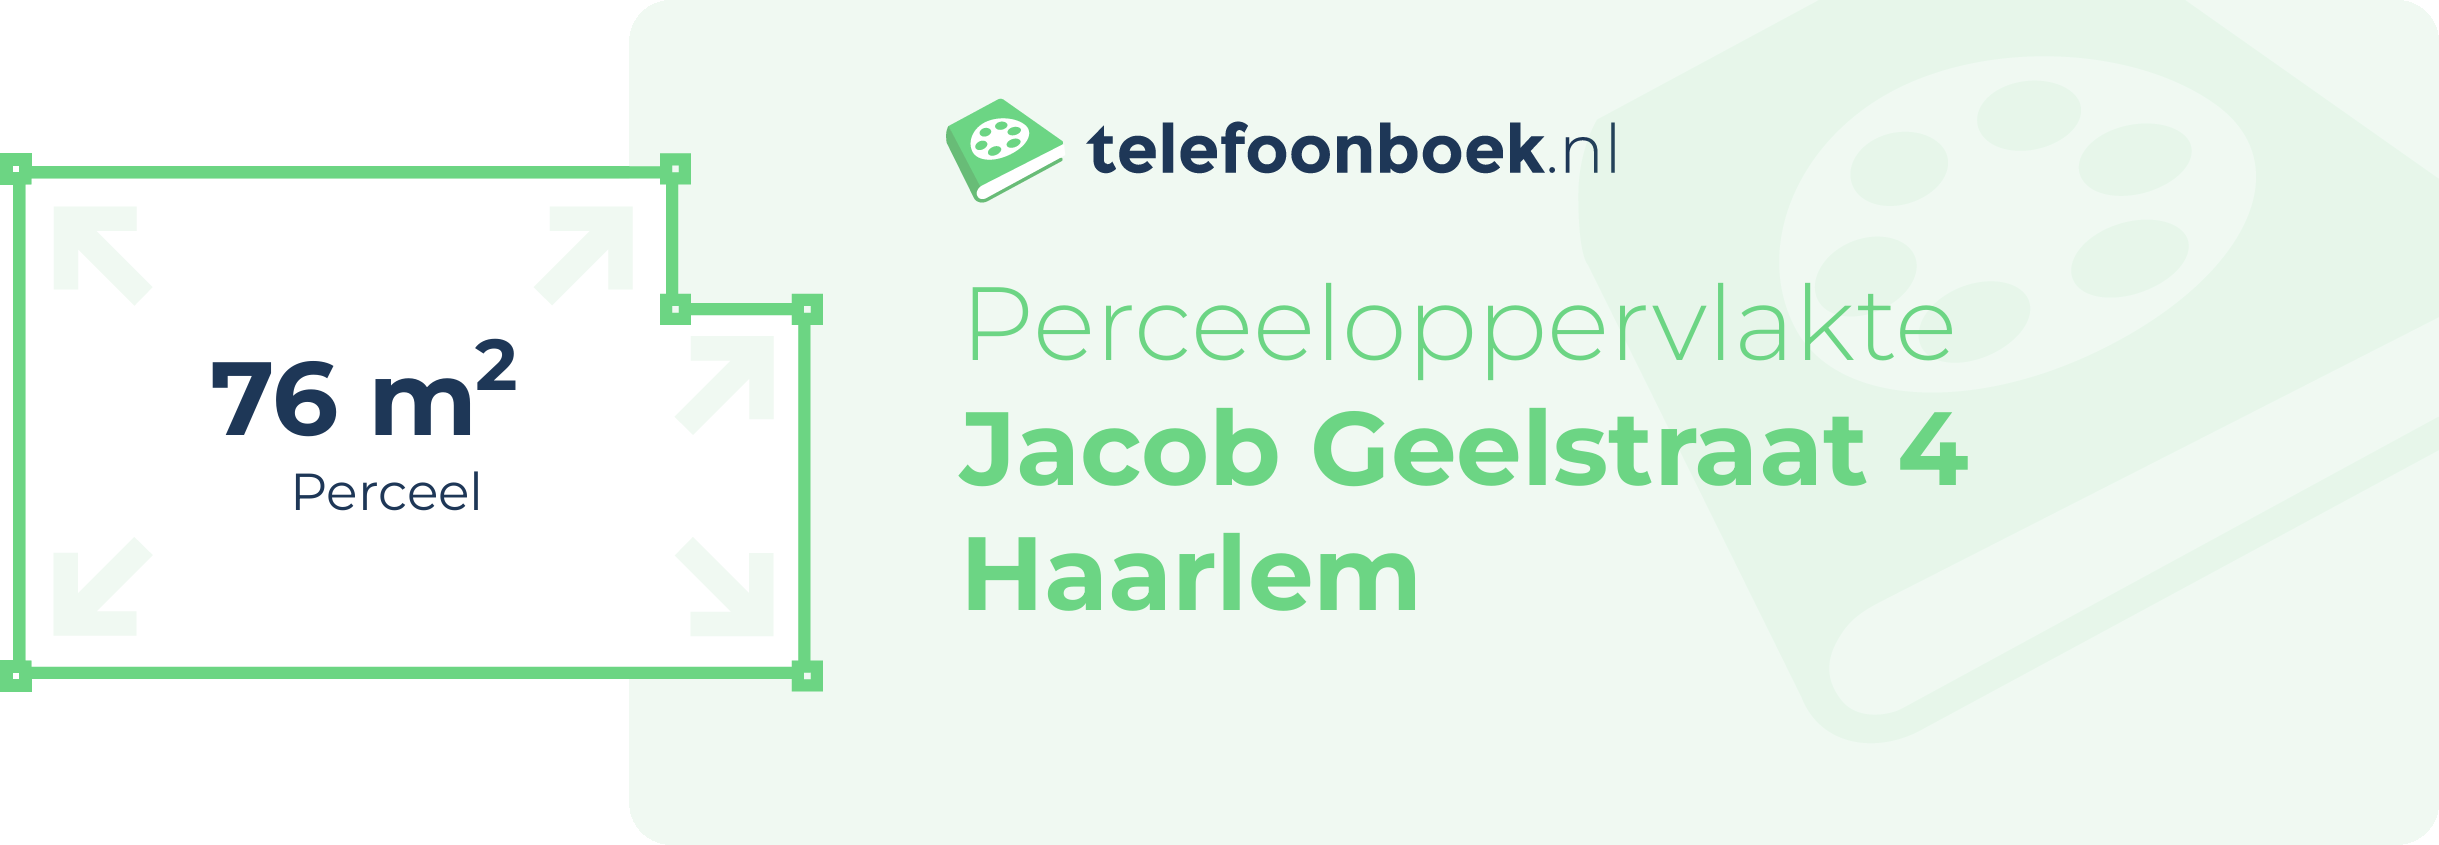 Perceeloppervlakte Jacob Geelstraat 4 Haarlem